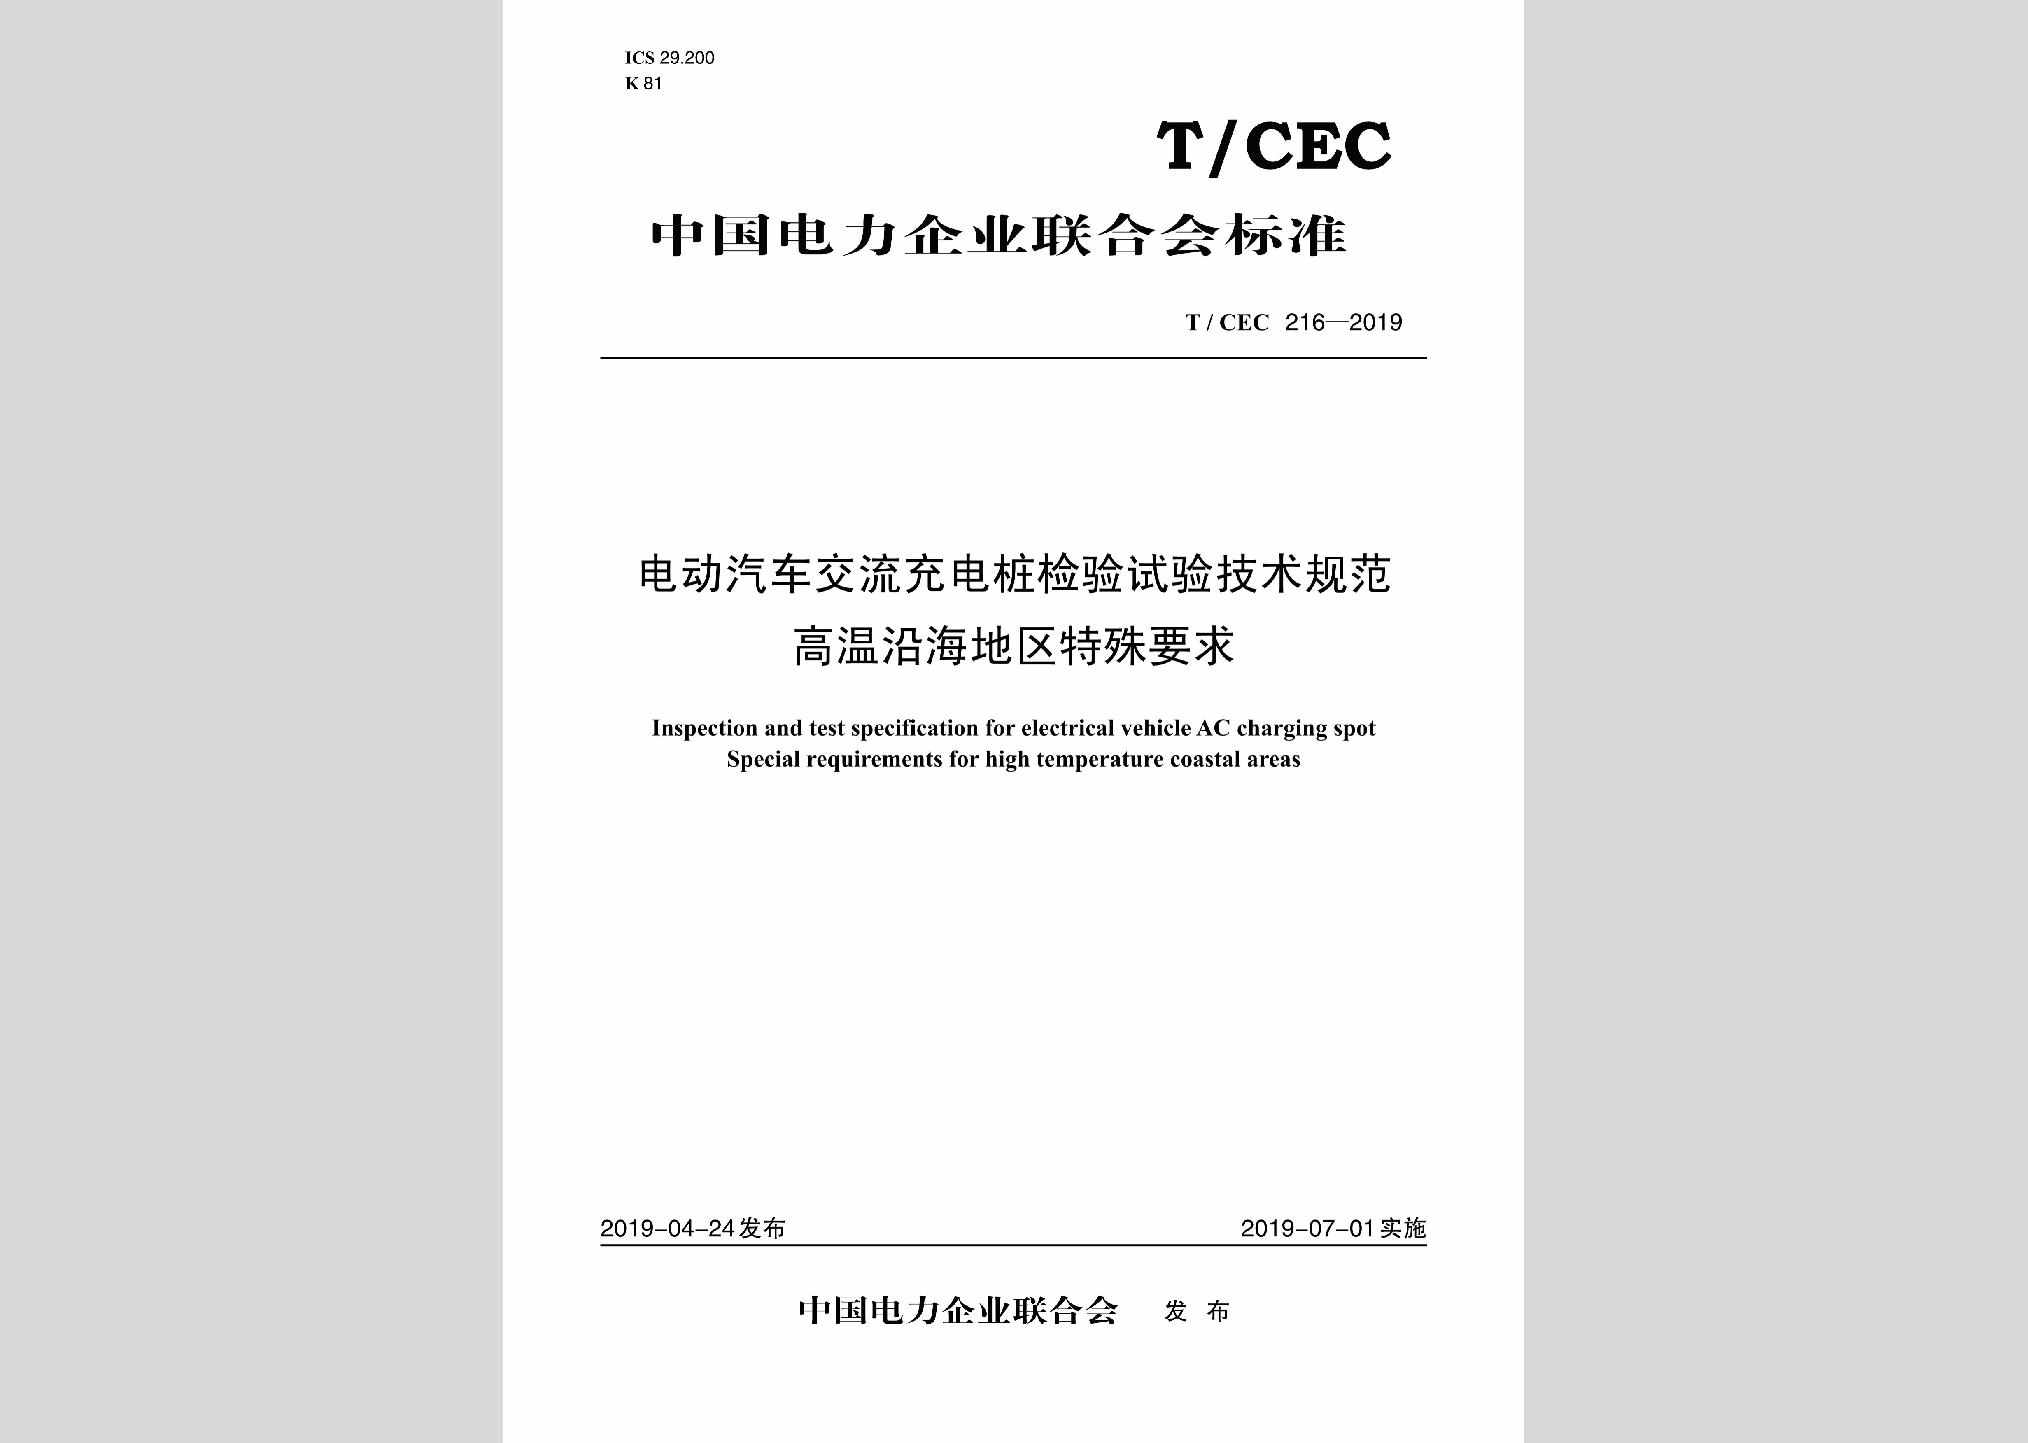 T/CEC216-2019：电动汽车交流充电桩检验试验技术规范高温沿海地区特殊要求